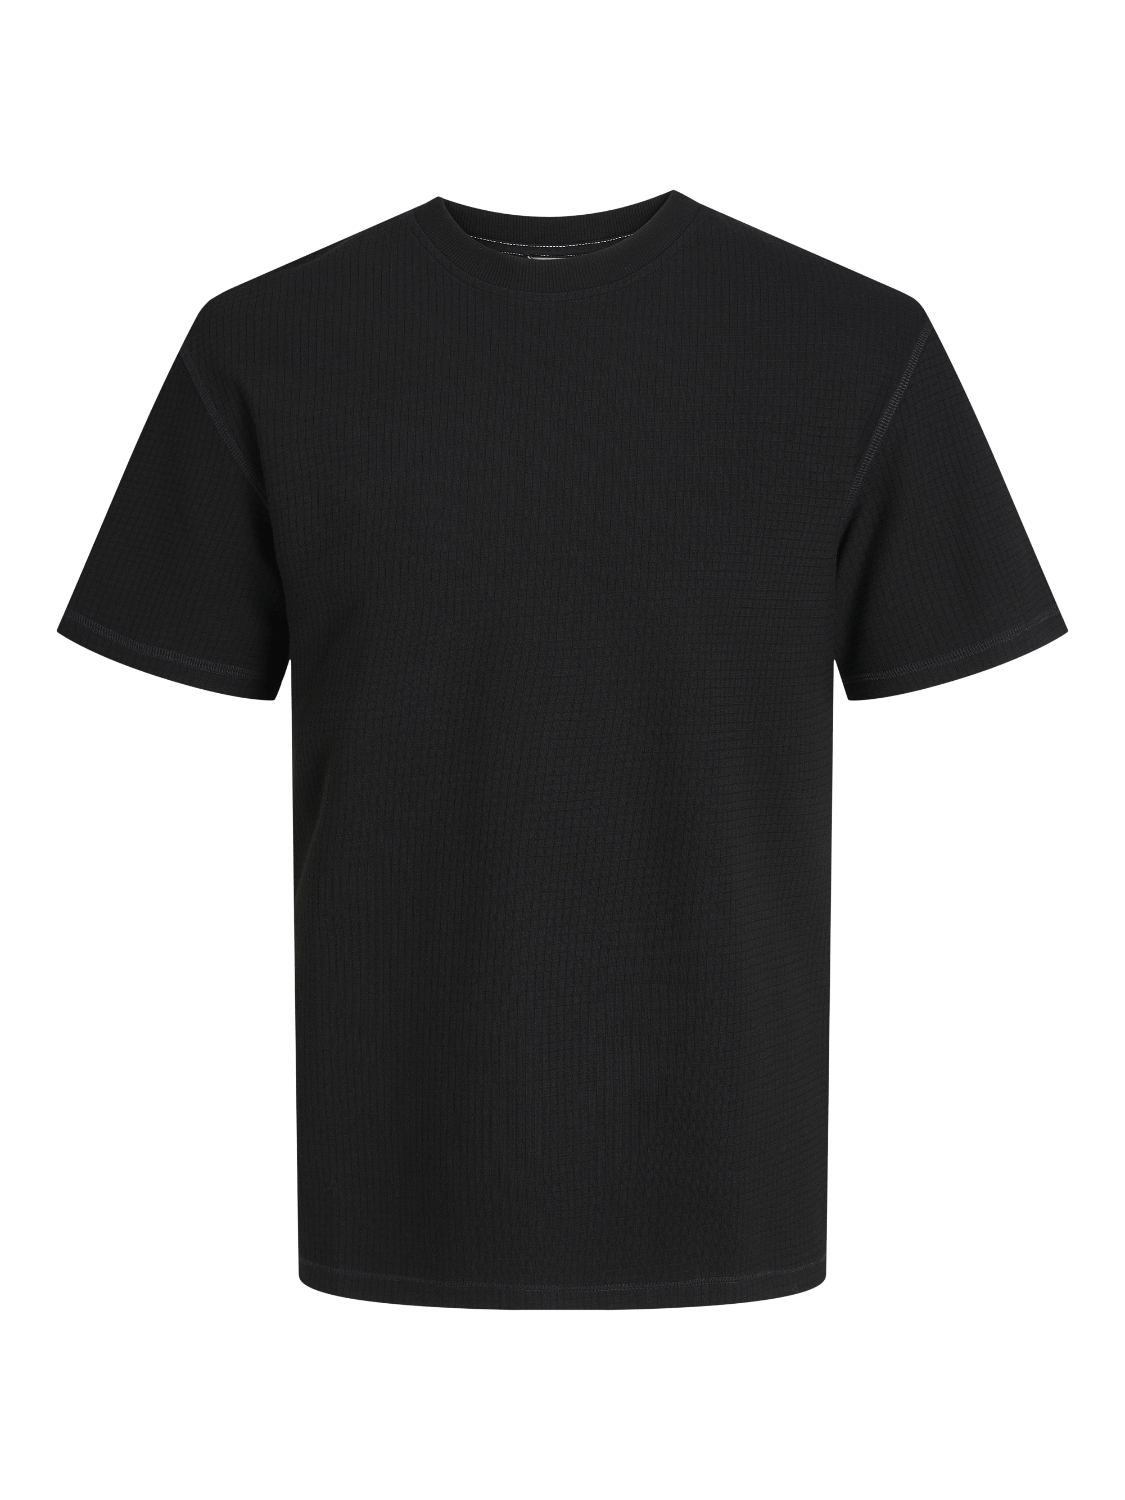 Camiseta básica manga corta negra -JCOBLACK